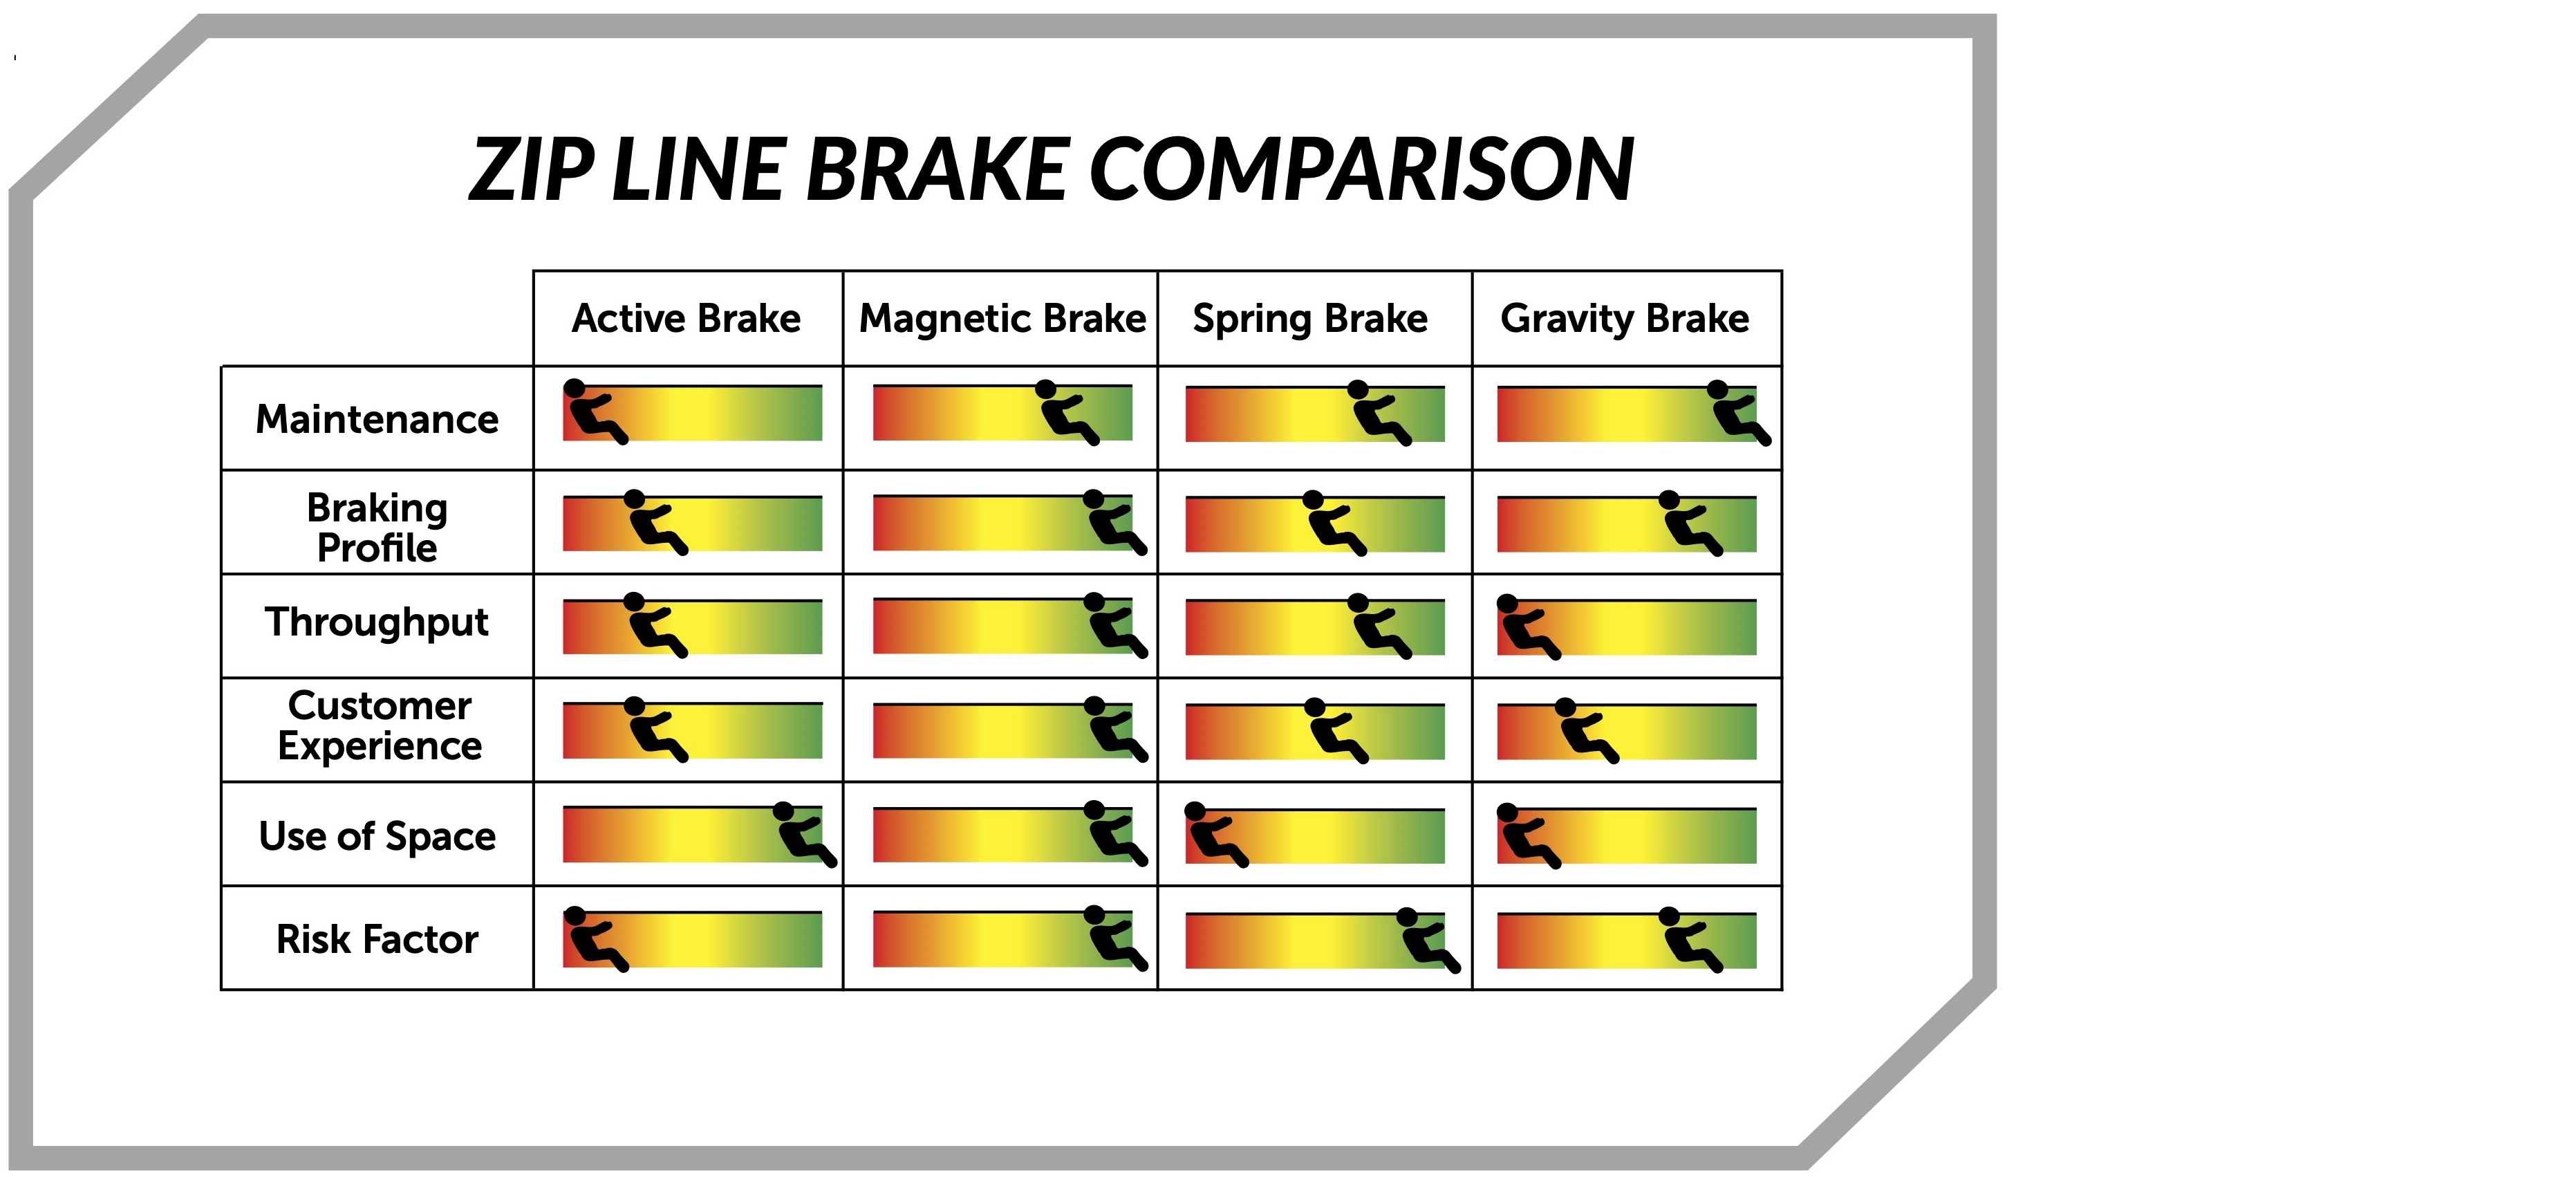 Zip line brake comparison chart